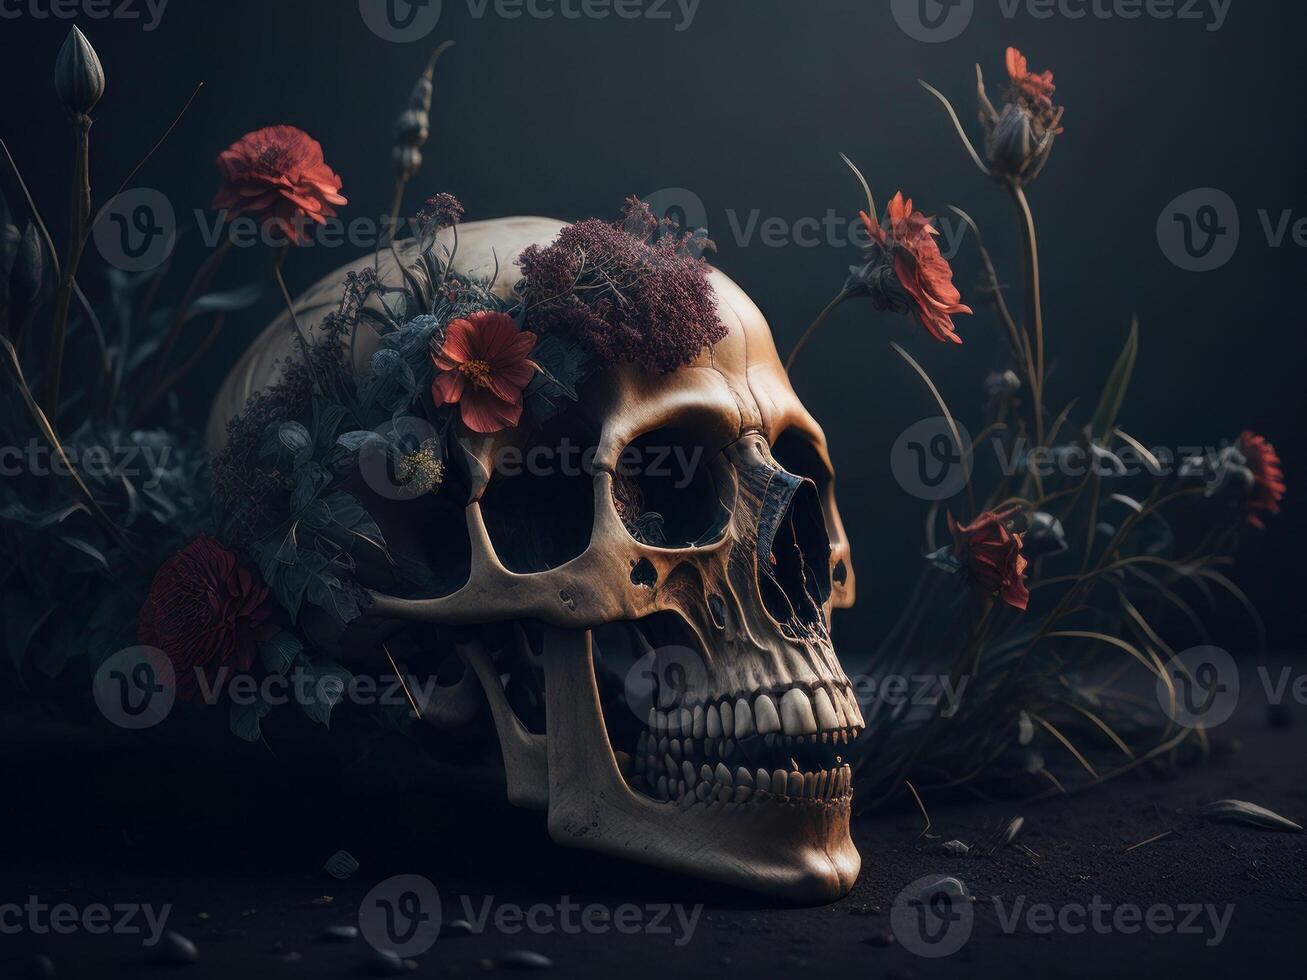 human skull full flowers. Halloween. photo